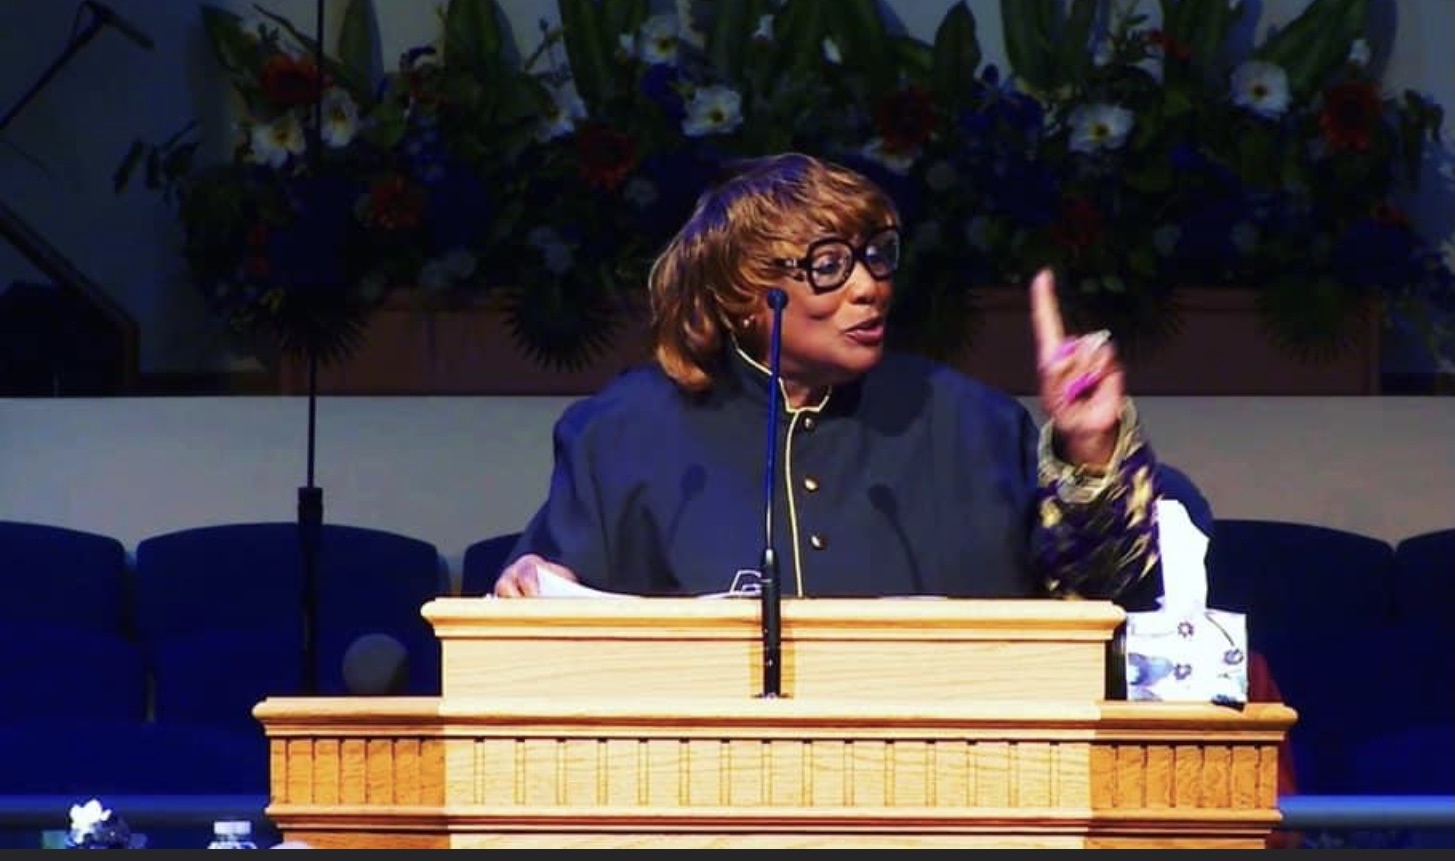 It's Praying Time! Rev. Etta Baldwin-Davis